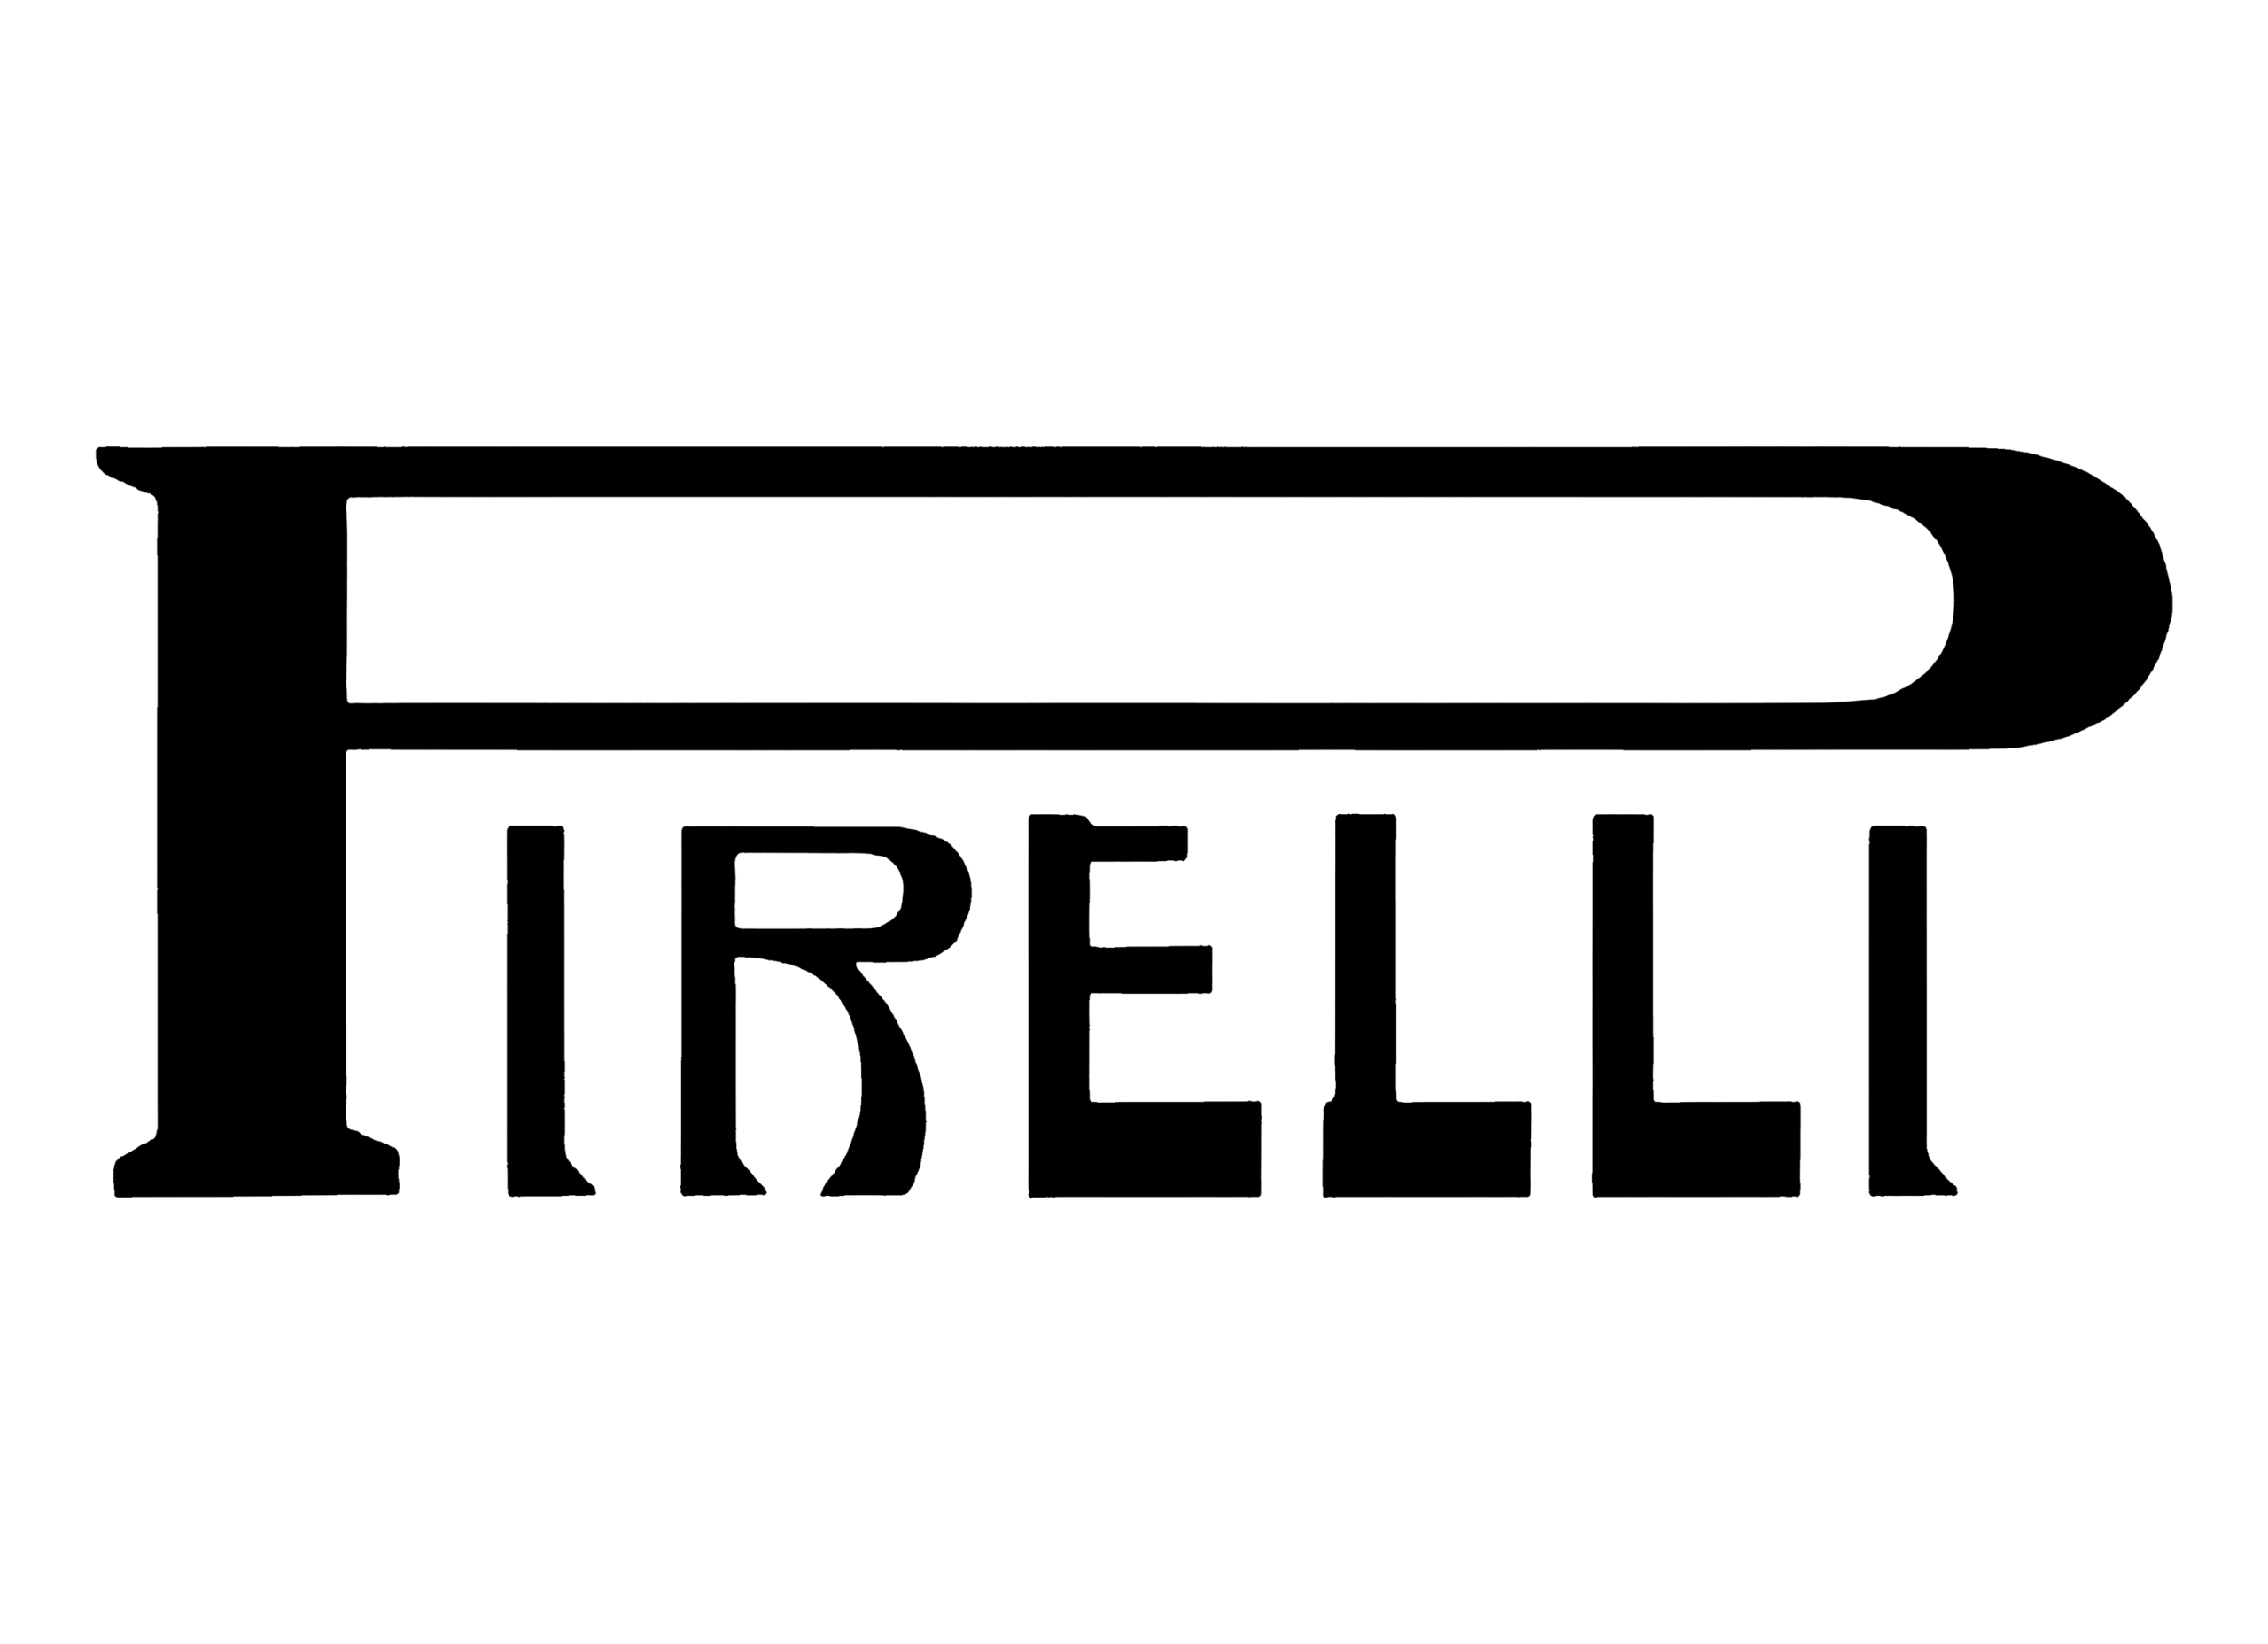 Pirelli logo 1916-1917